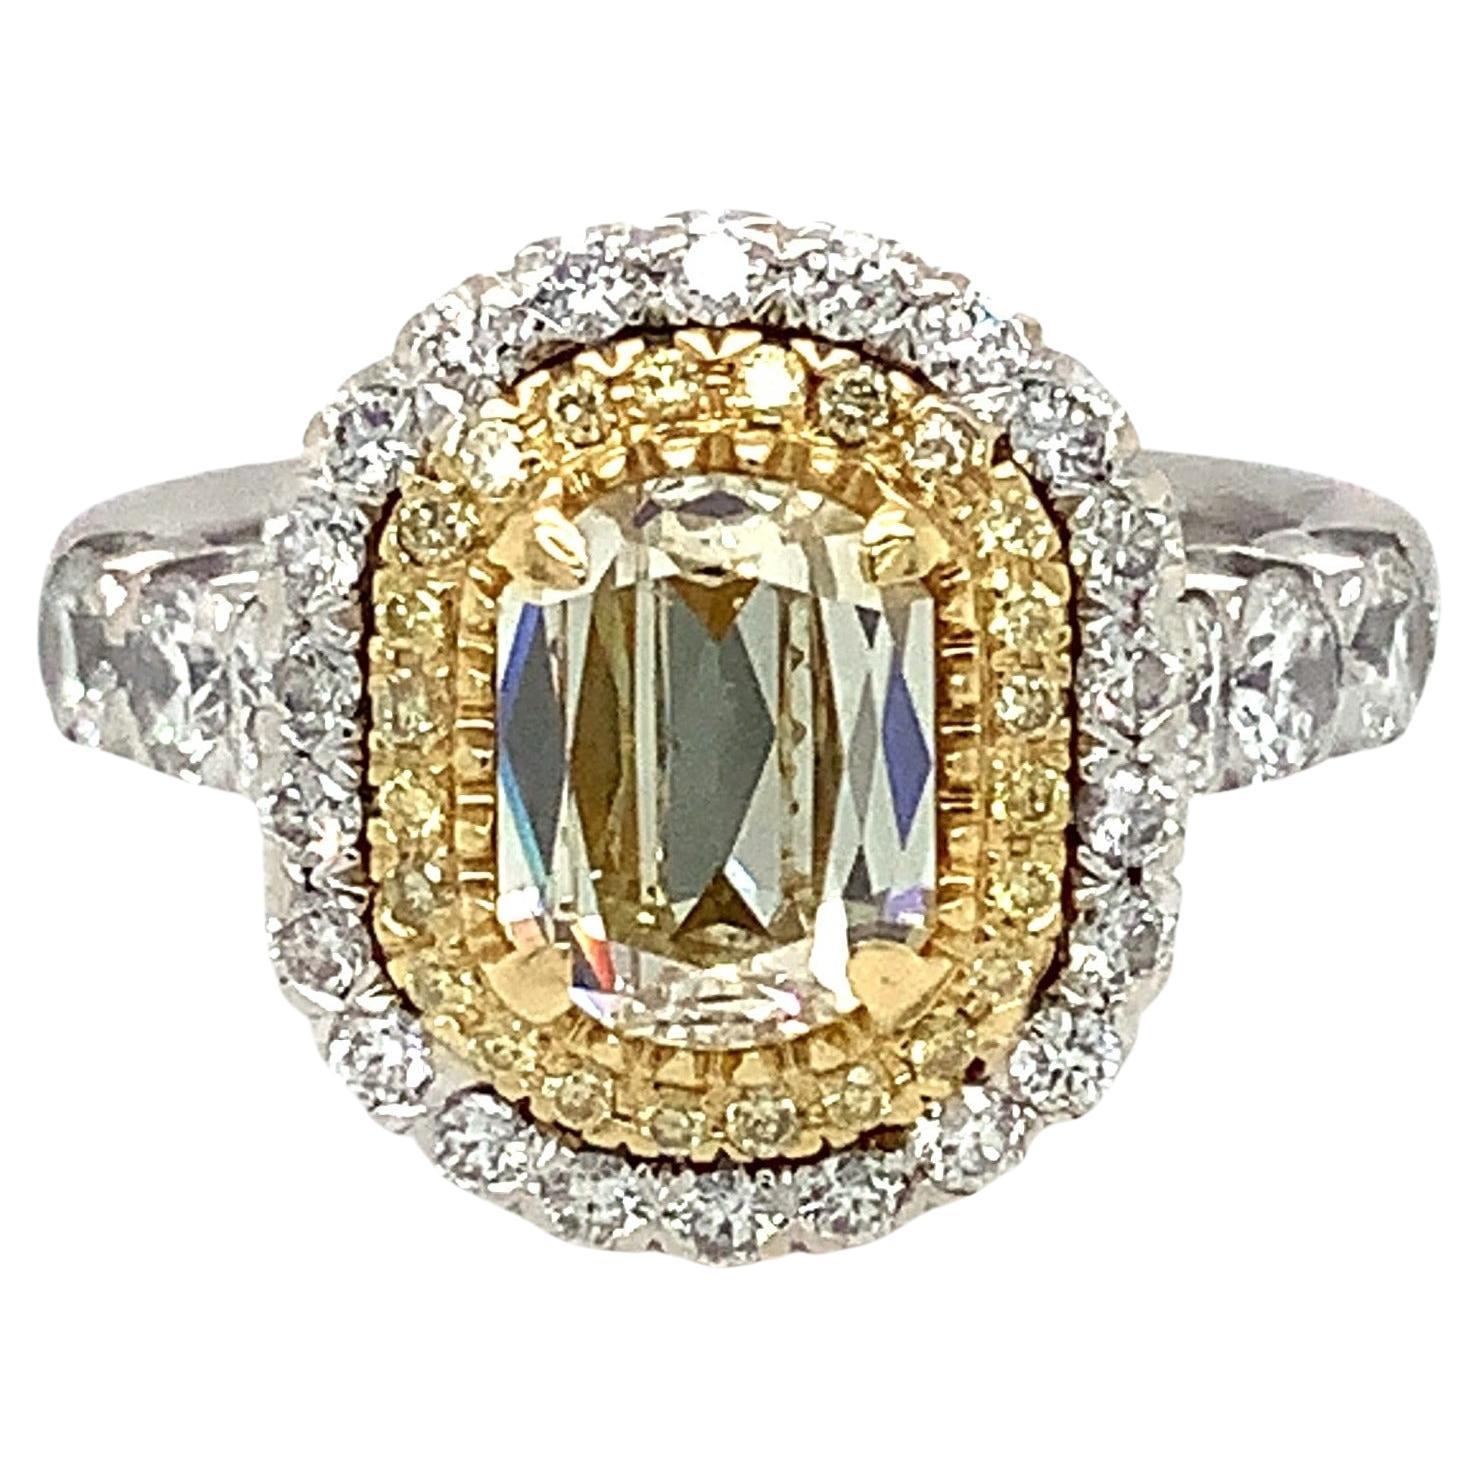 Christopher Designs L'Amour Crisscut Light Fancy Yellow Diamond Ring Set in 18K